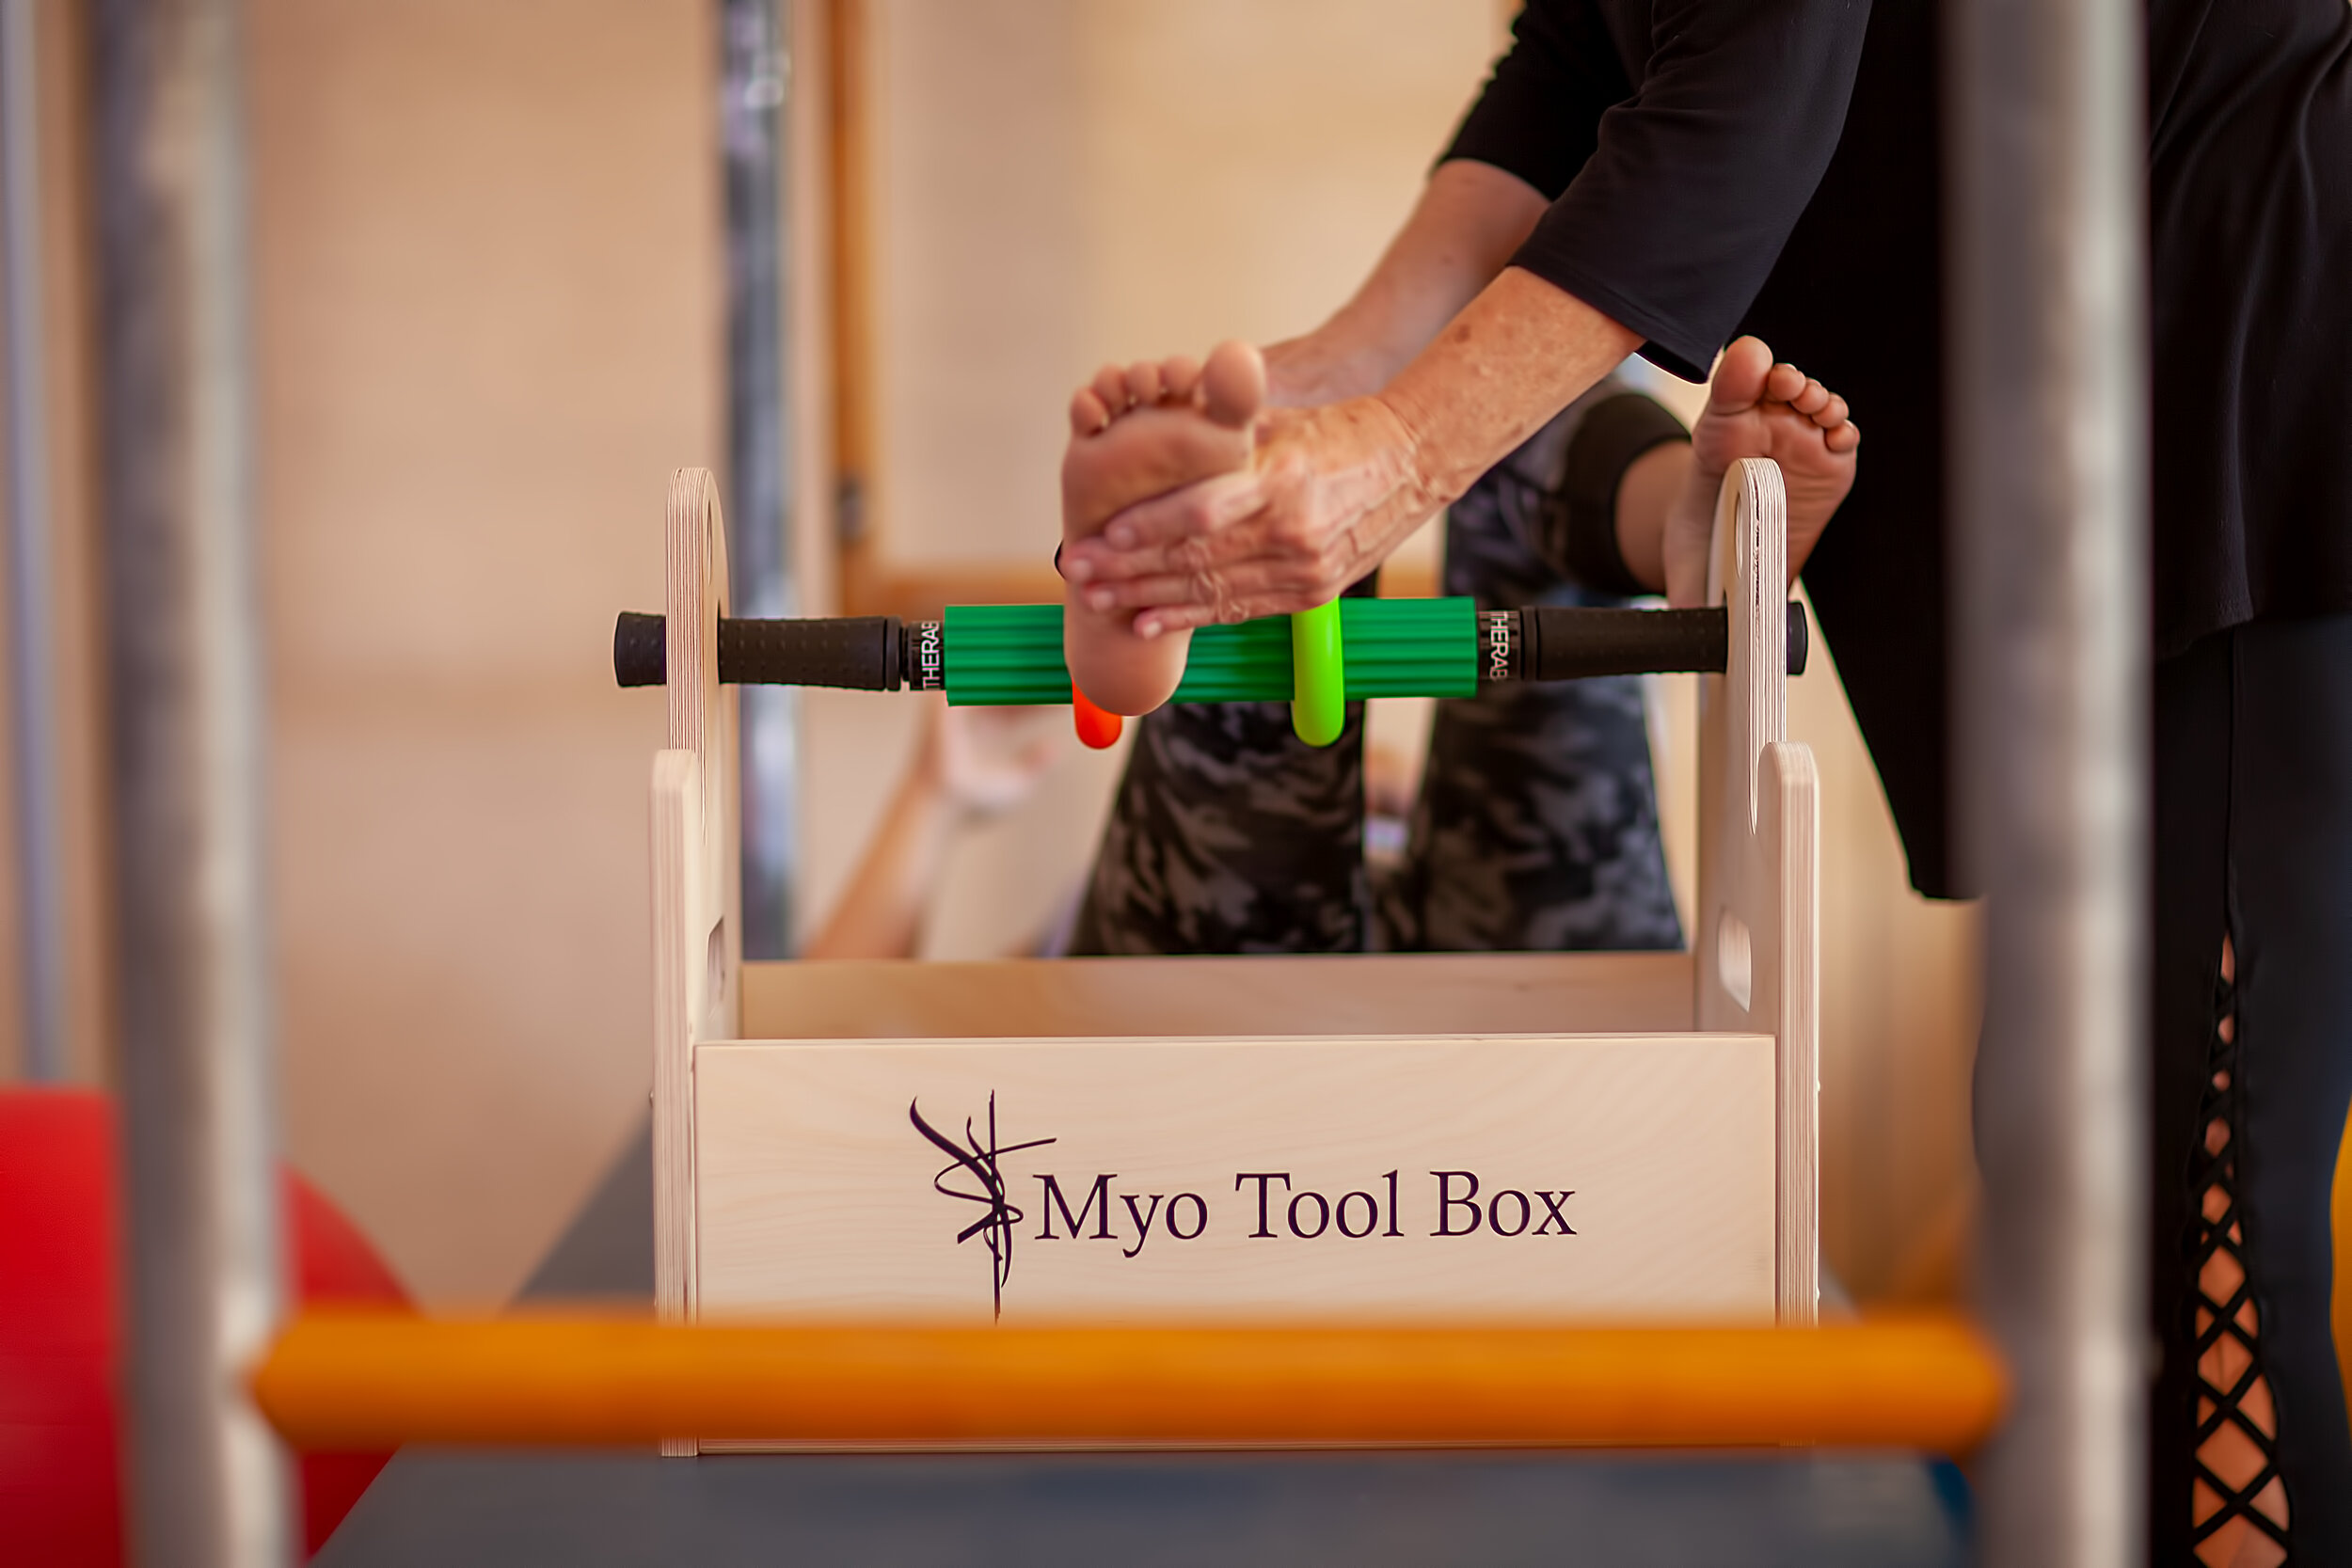 Group Class MYoTool Box Body Flossing_2019-10-04 22.49.21.jpg